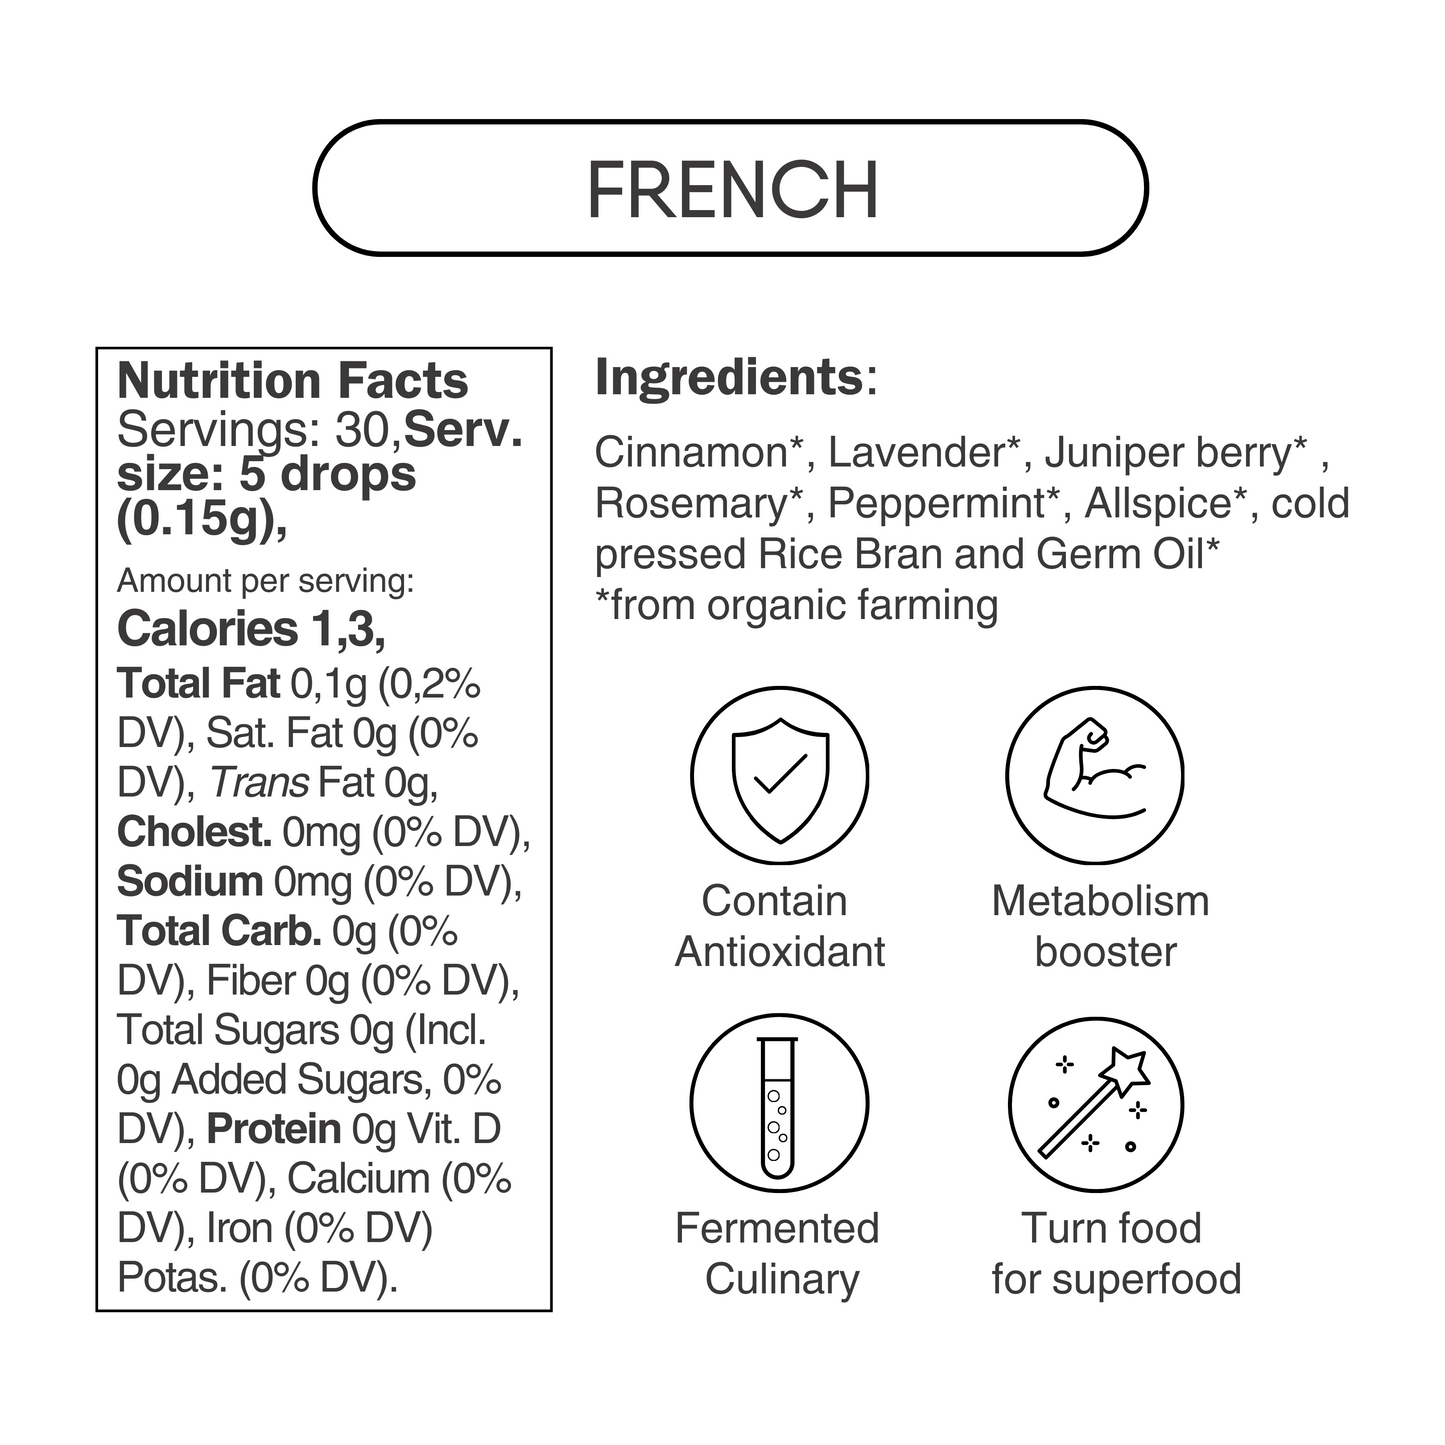 Oregano based Culinary Antioxidants Set